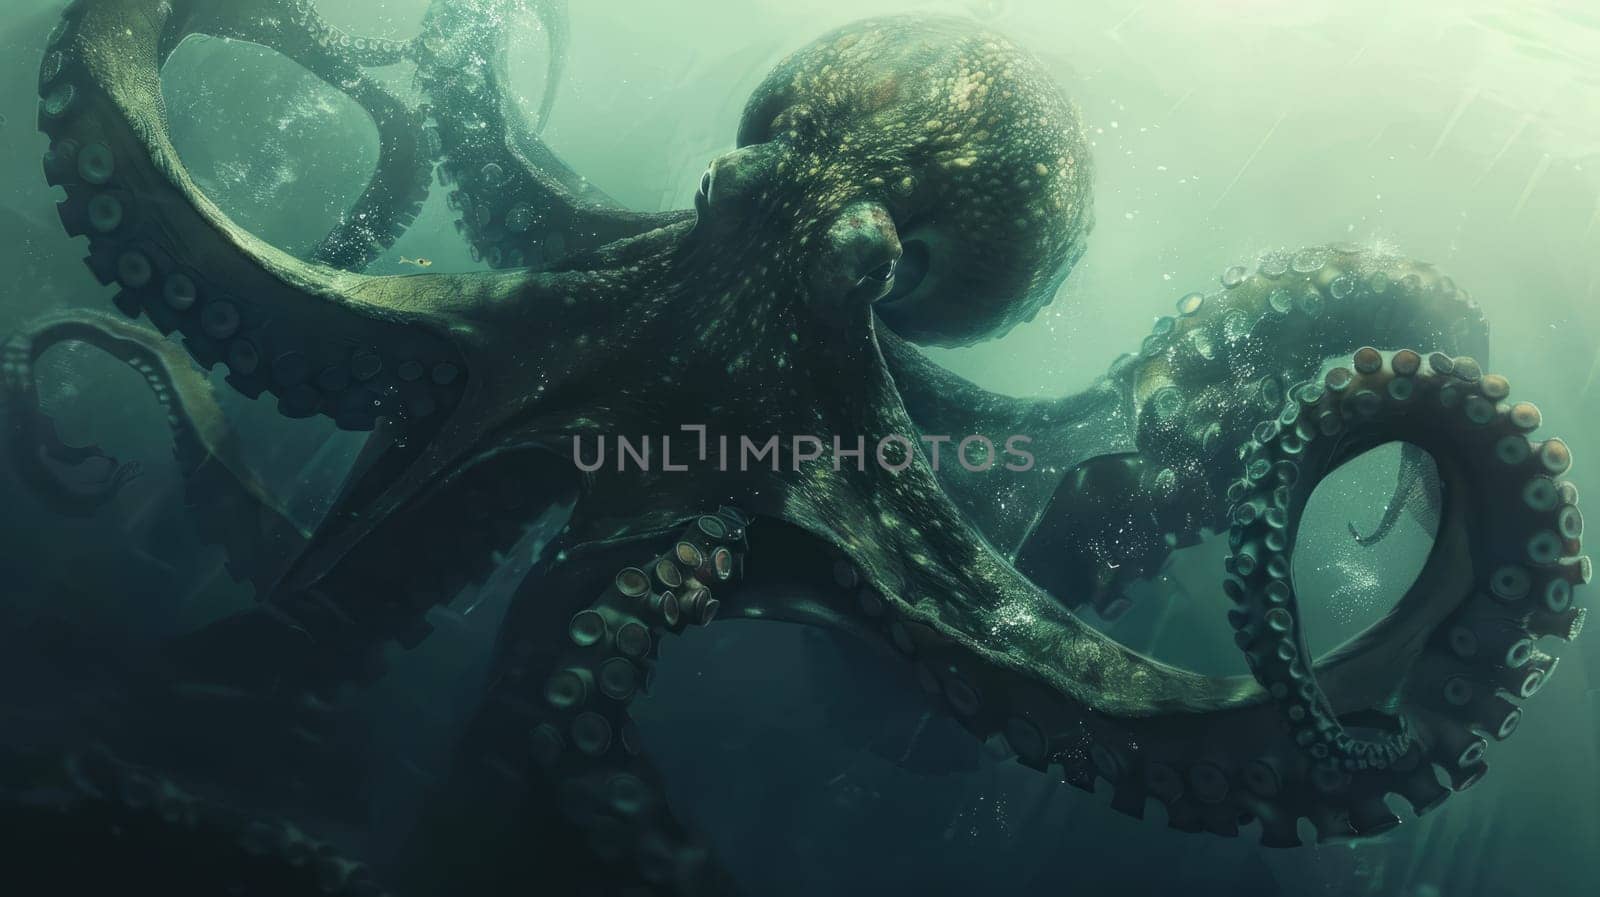 Octopus. Huge Kraken. Monster attacking ships in a storm by natali_brill